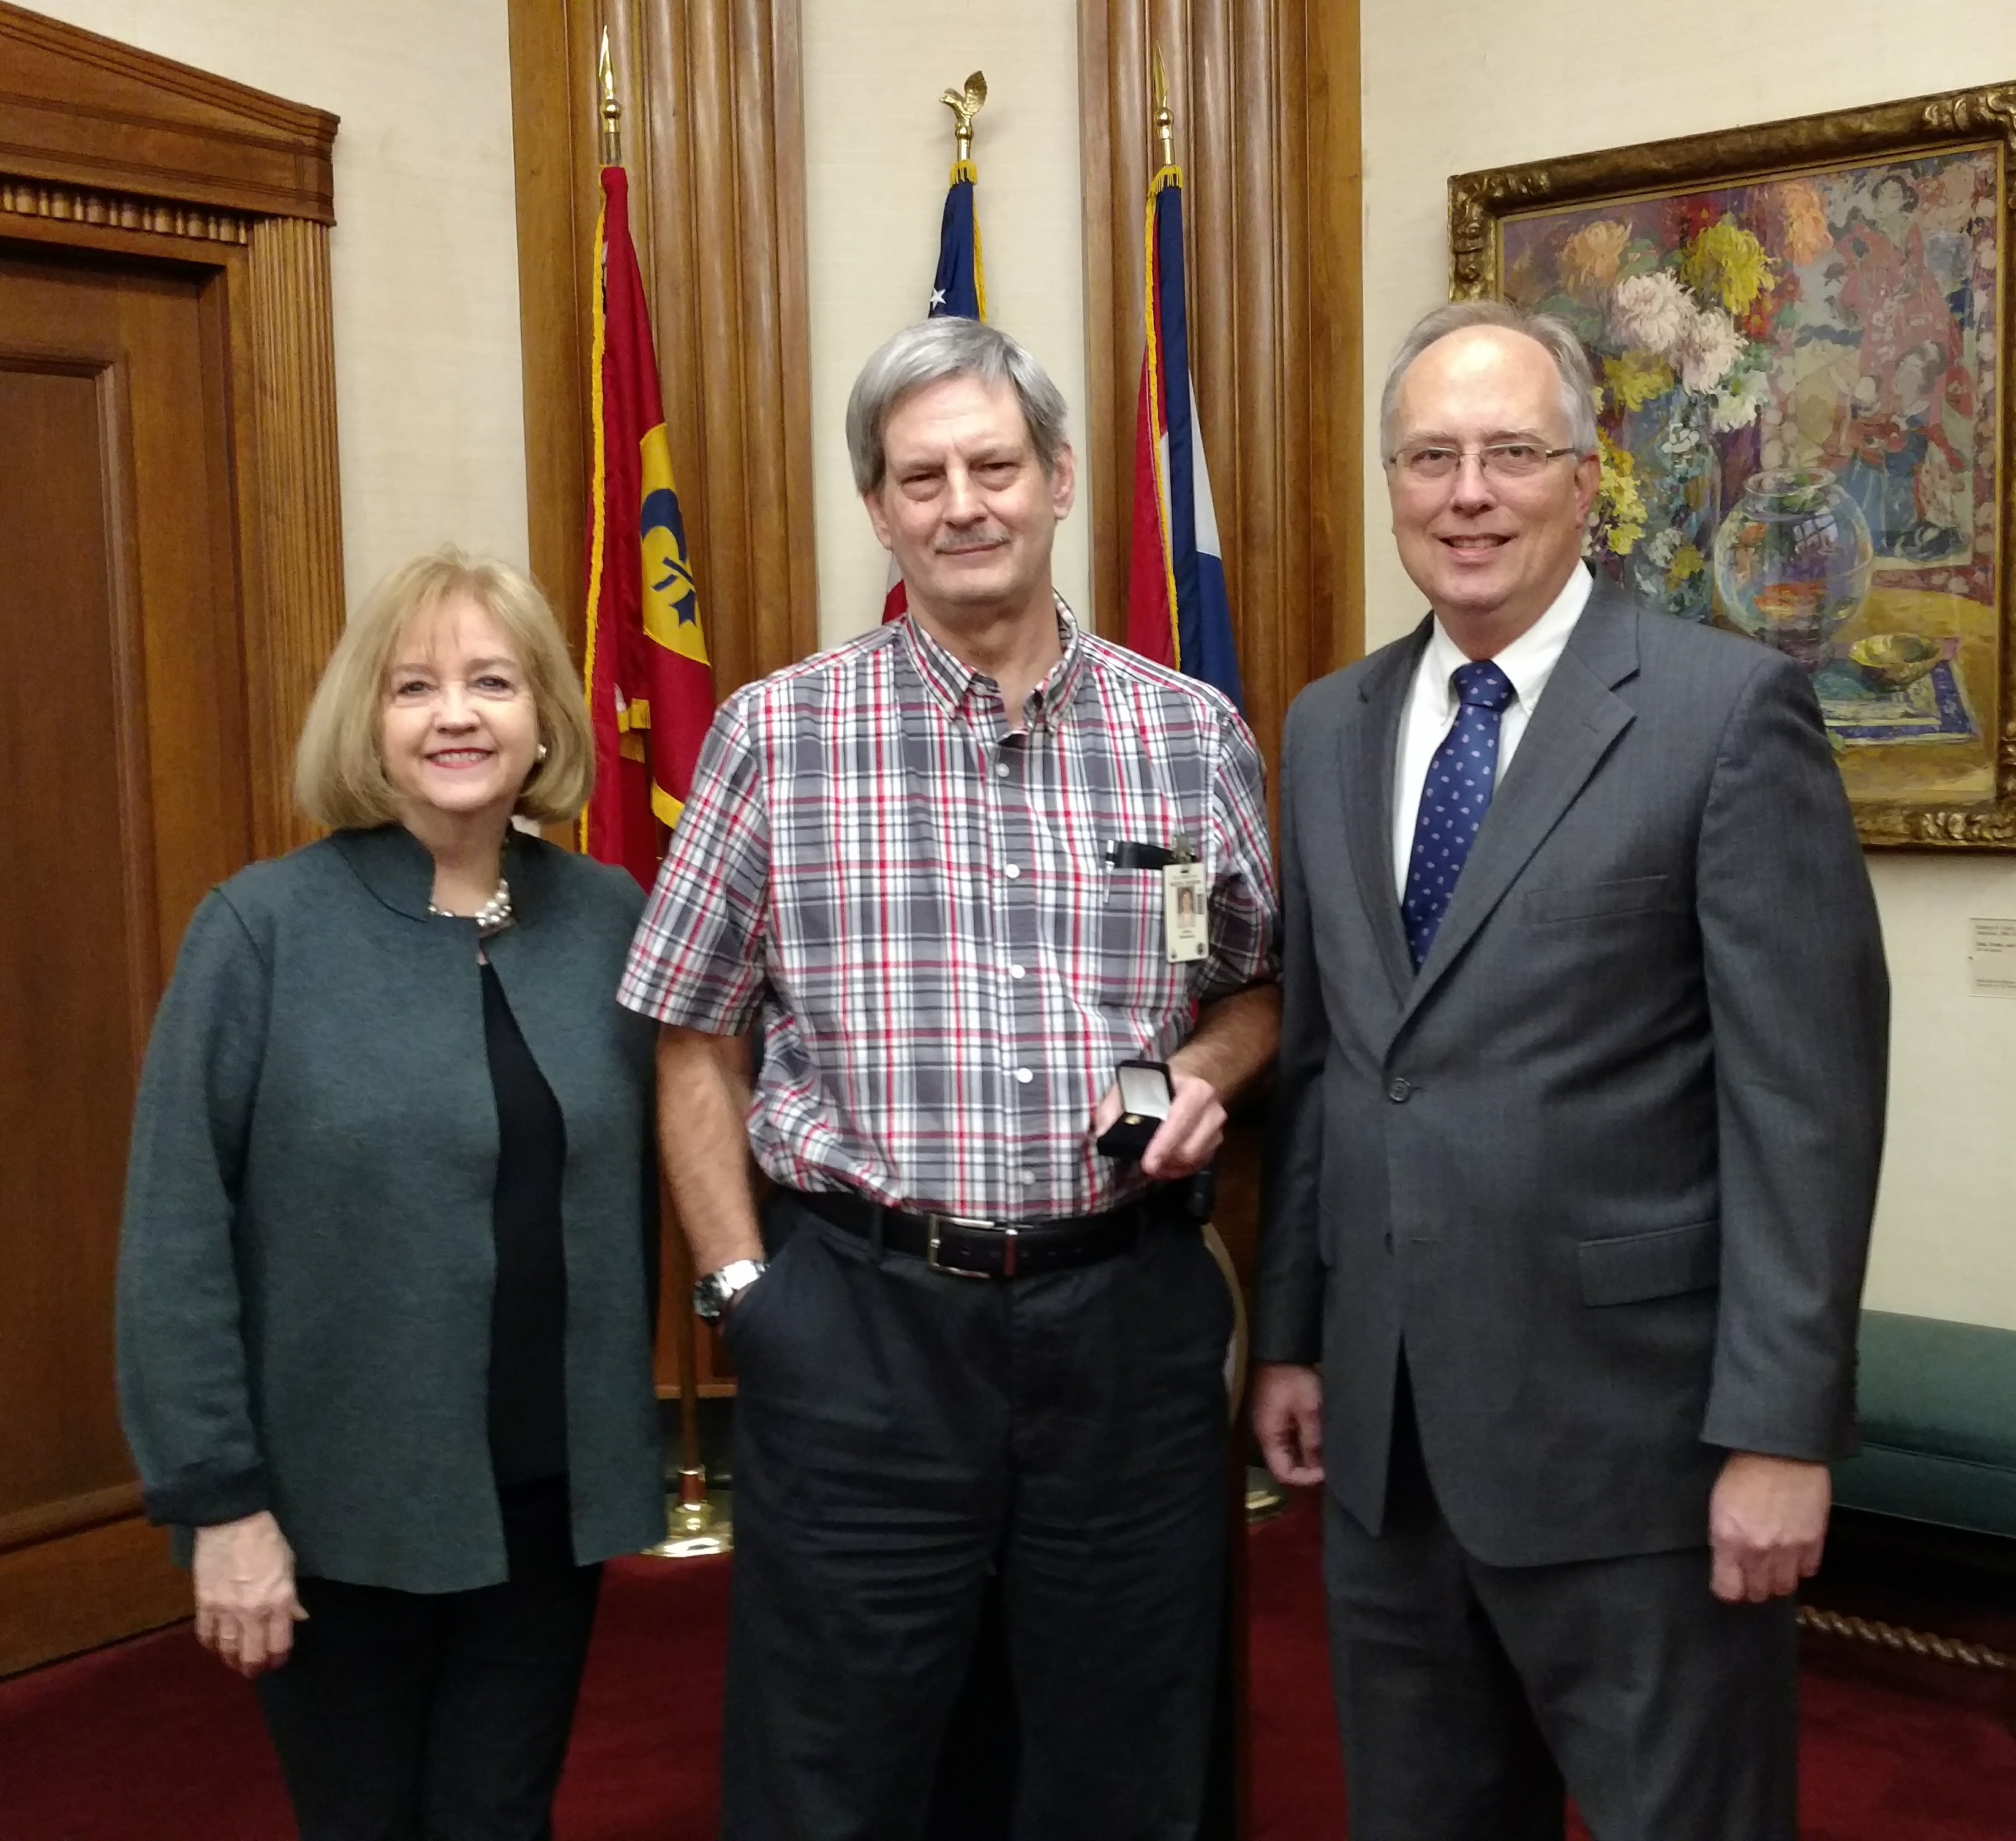 Mayor Lyda Krewson, Jeff Stevenson and Public Utilities Director Curt Skouby